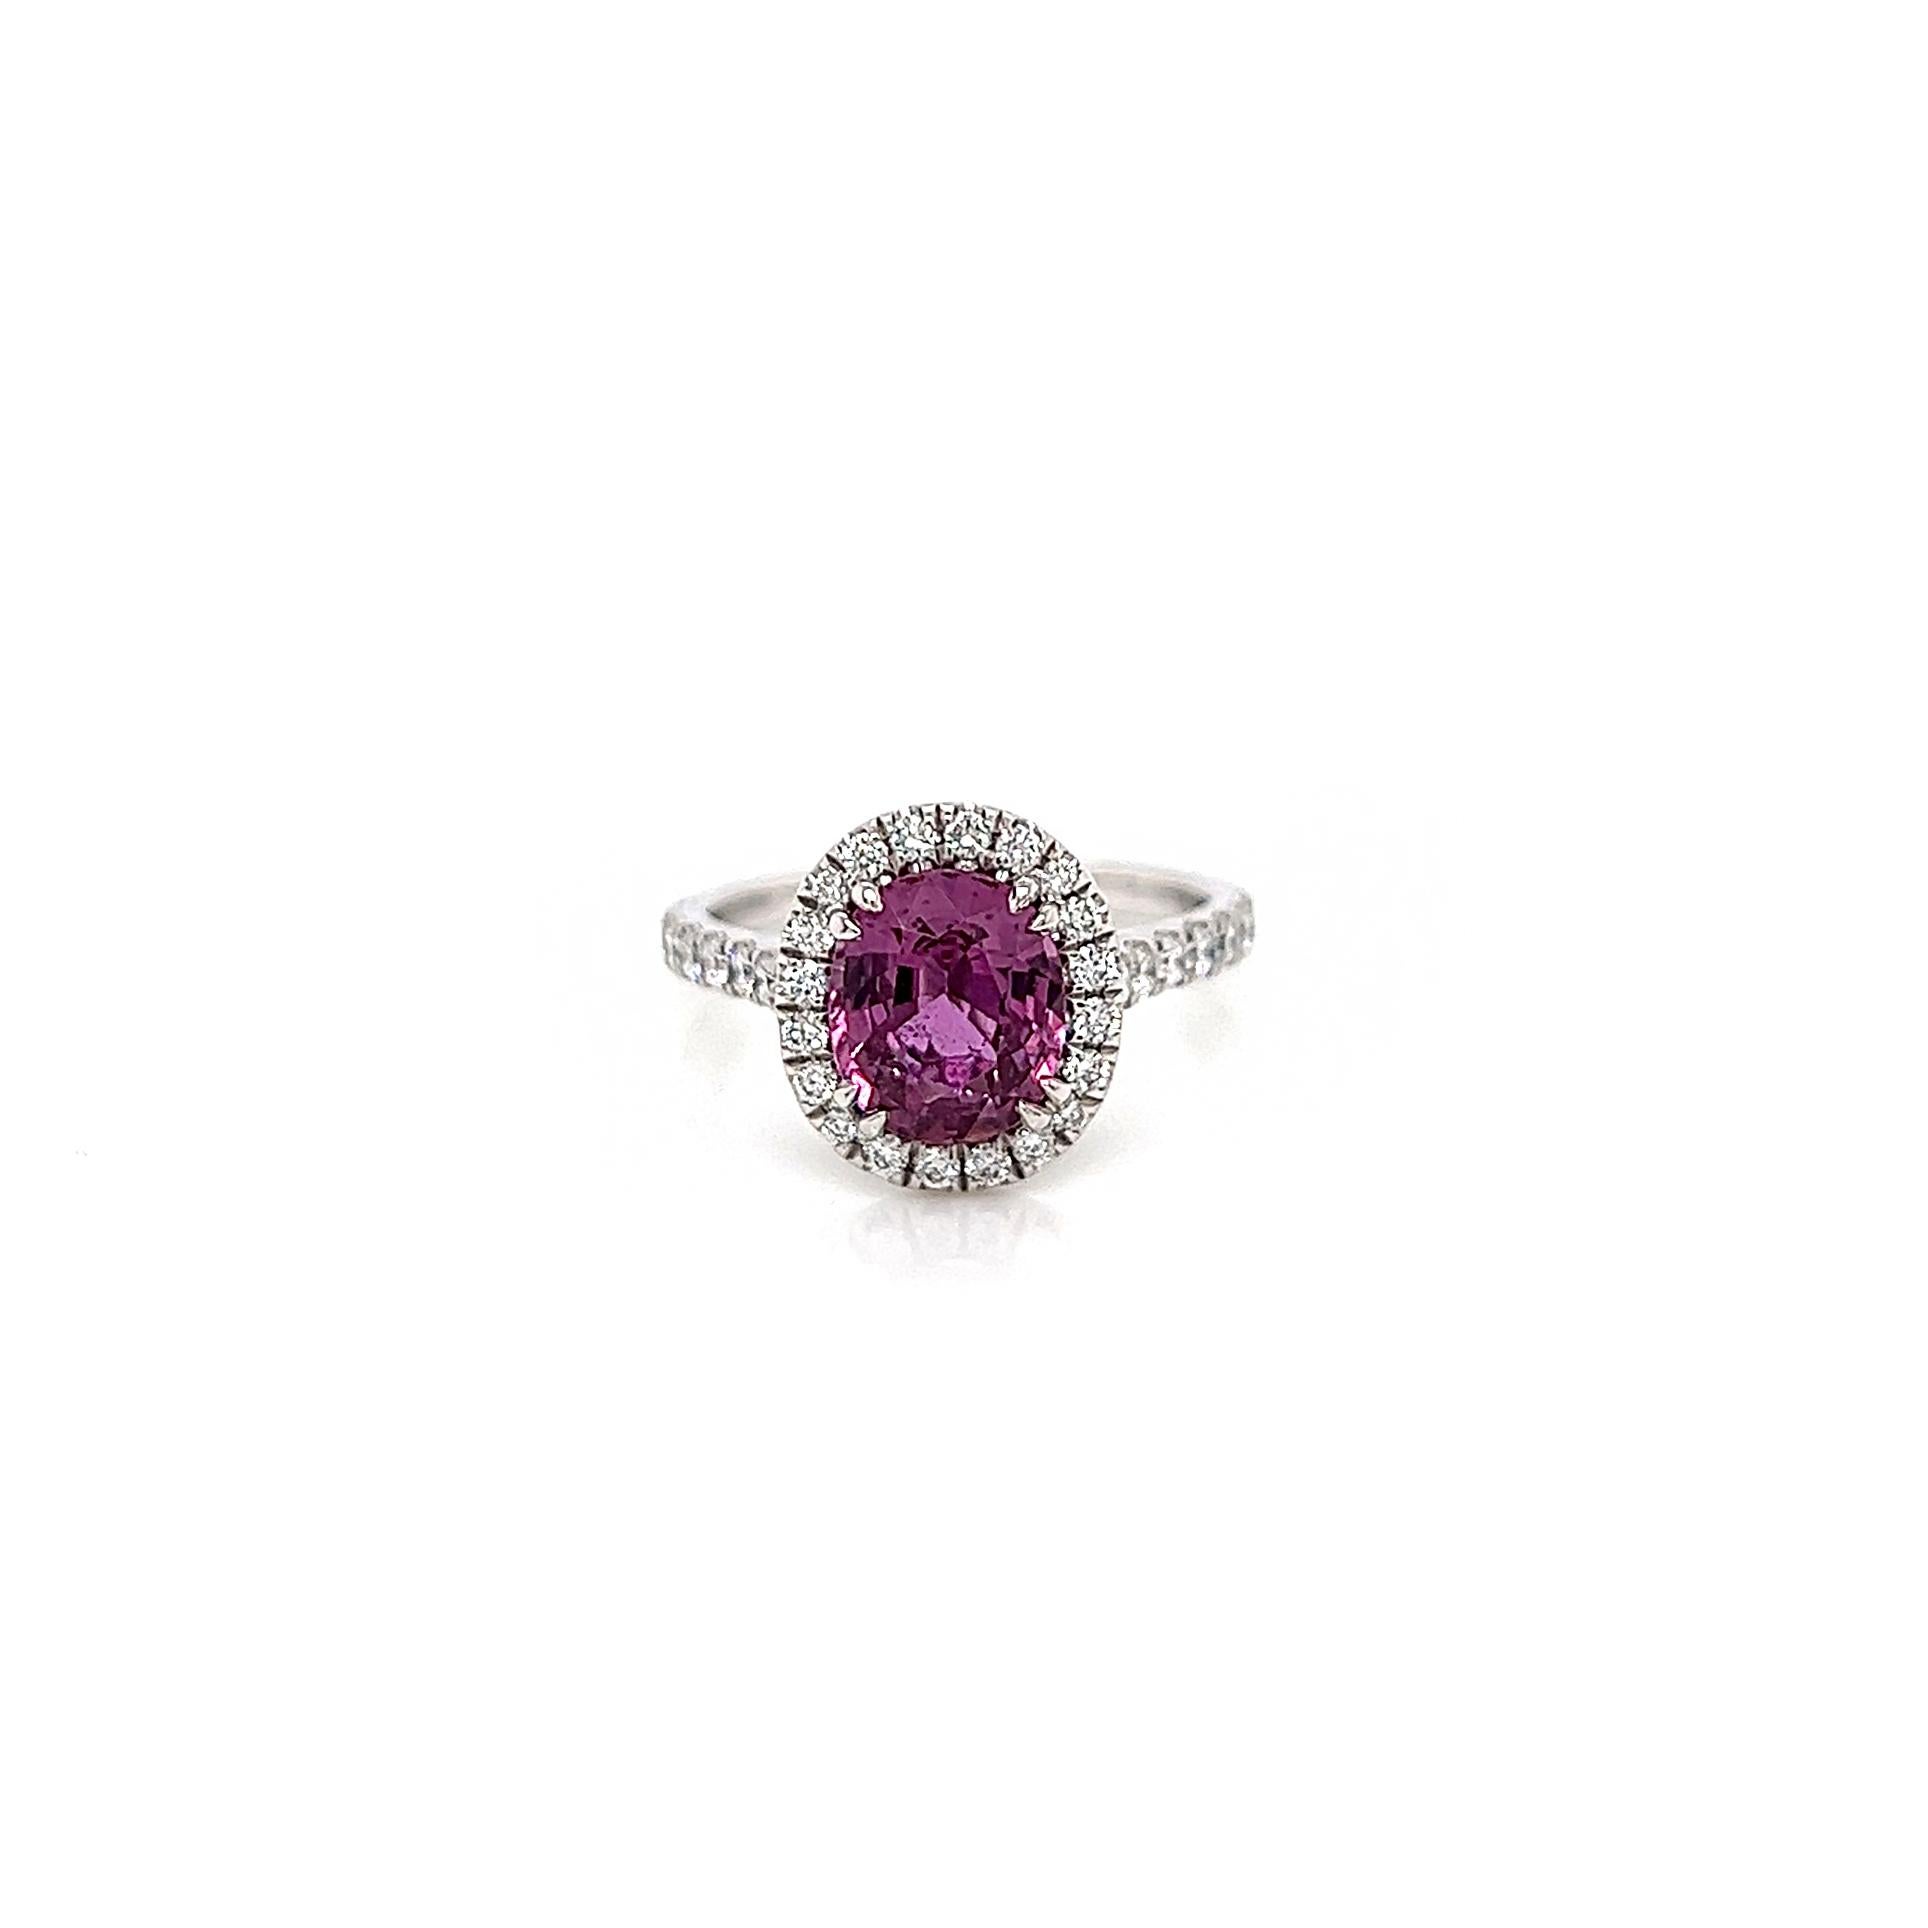 3.32 Total Carat Pink Sapphire and Diamond Halo Ladies Ring. GIA Certified.

-Metal Type: Platinum
-2.56 Carat Oval Cut Natural Sapphire, GIA Certified 
-Sapphire Color: Purplish Pink 
-Sapphire Measurements: 8.56 x 7.28 x 4.73 mm
-0.76 Carat Round